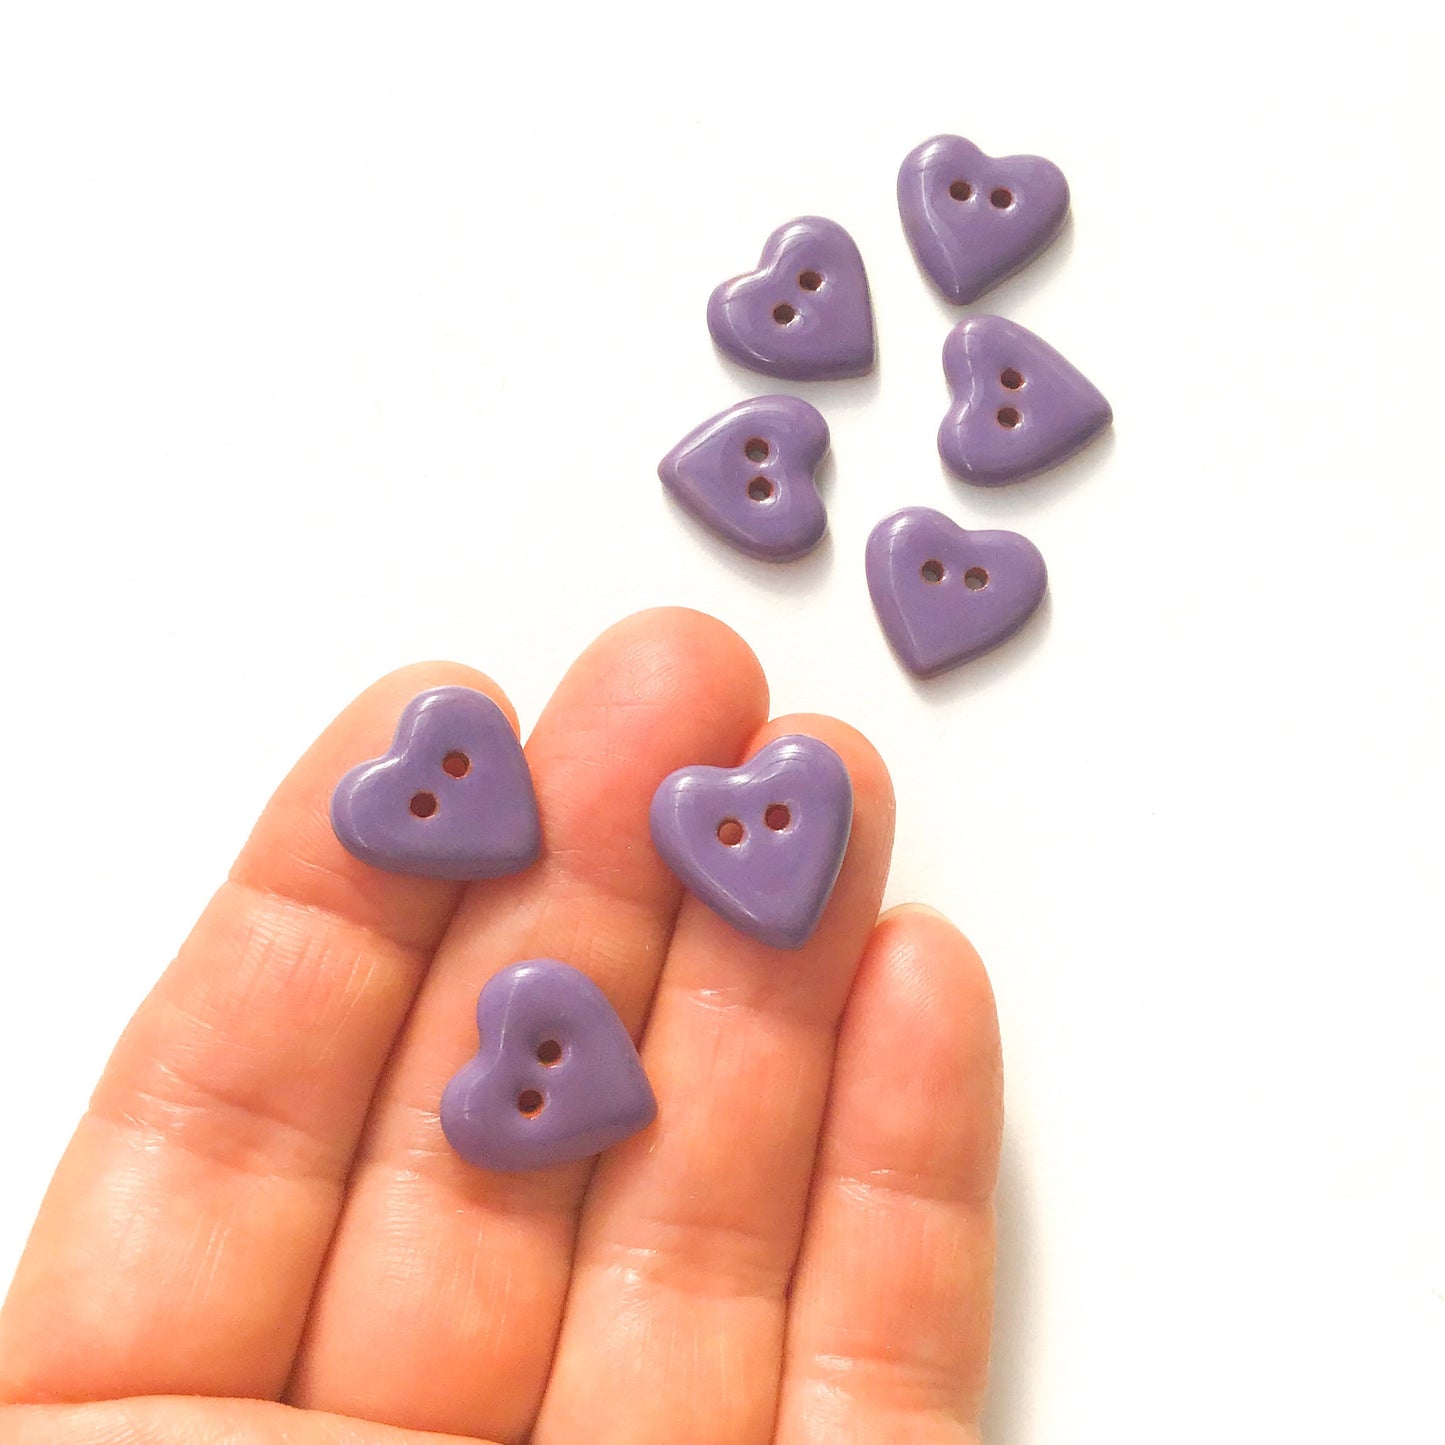 Purple Heart Buttons - Ceramic Heart Buttons - 5/8" - 8 Pack (ws-174)